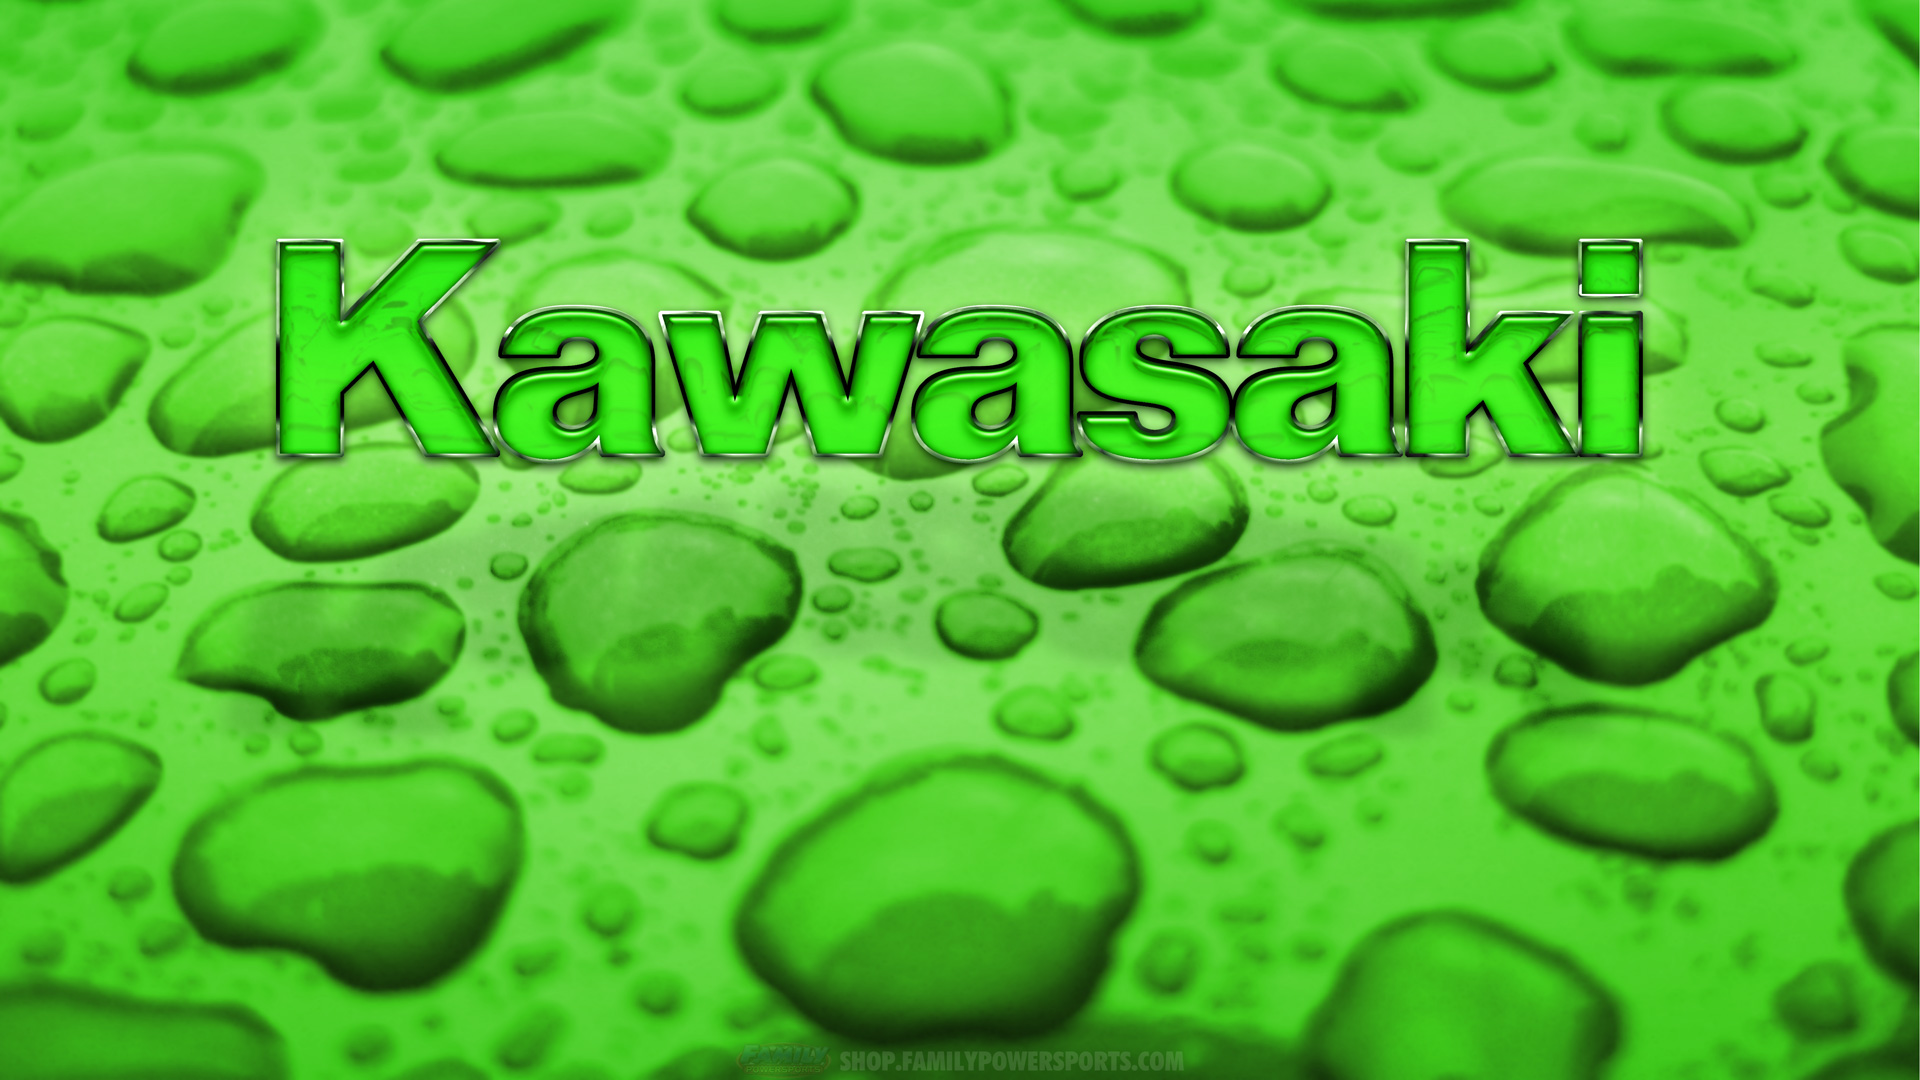 Kawasaki wallpaper 124367